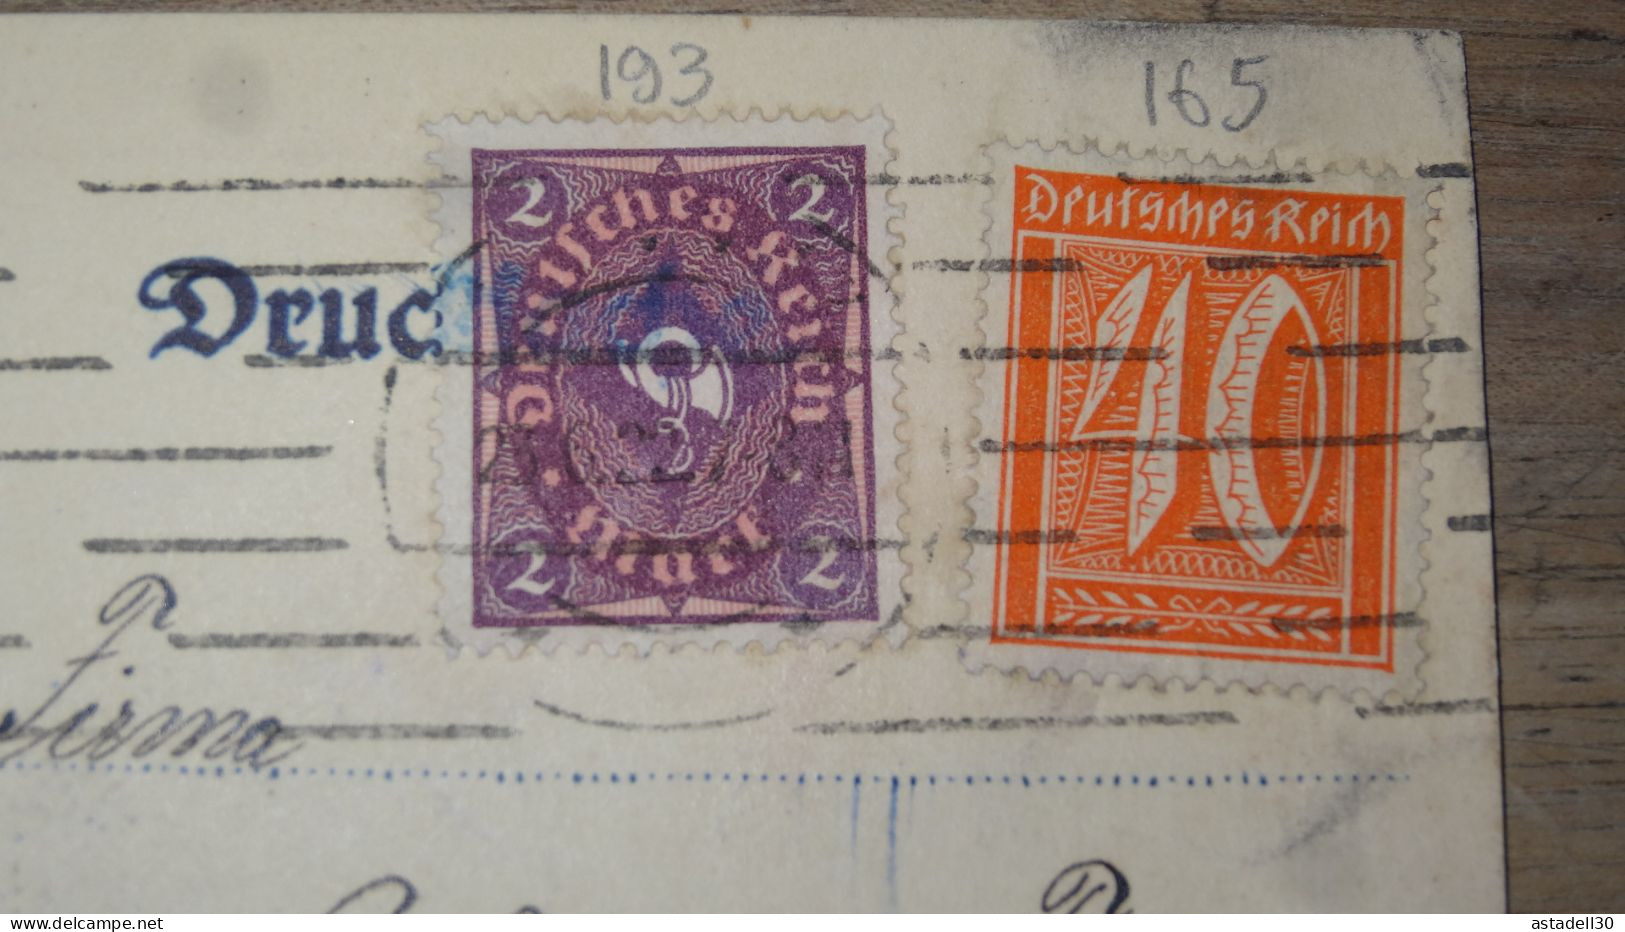 Carte Postale Commerciale De CHEMNITZ  ............. 240424-18806 - Chemnitz